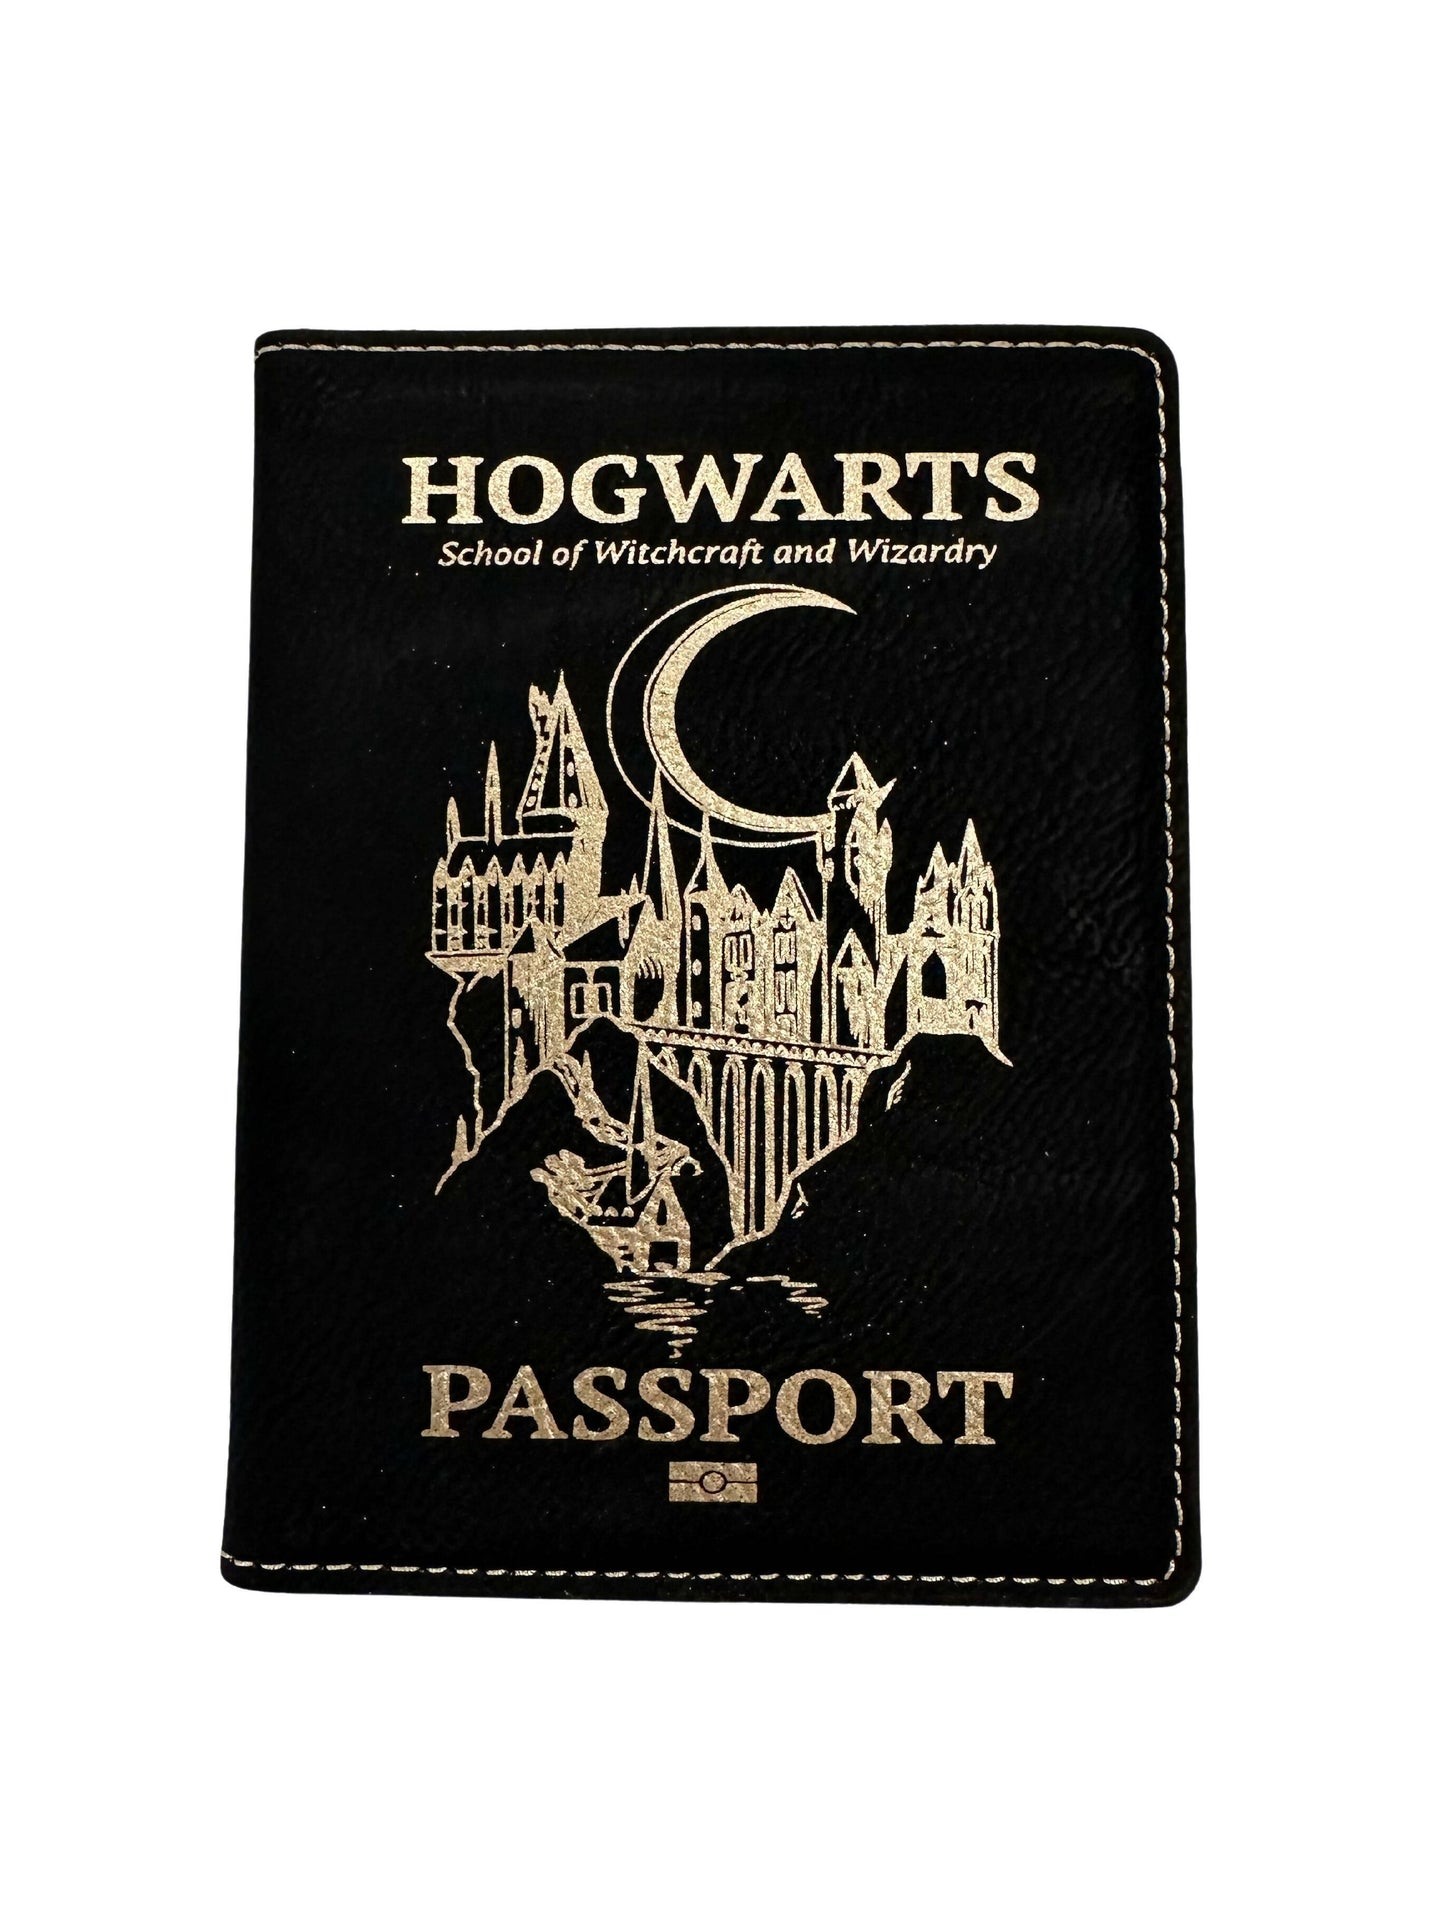 Hogwarts passport cover